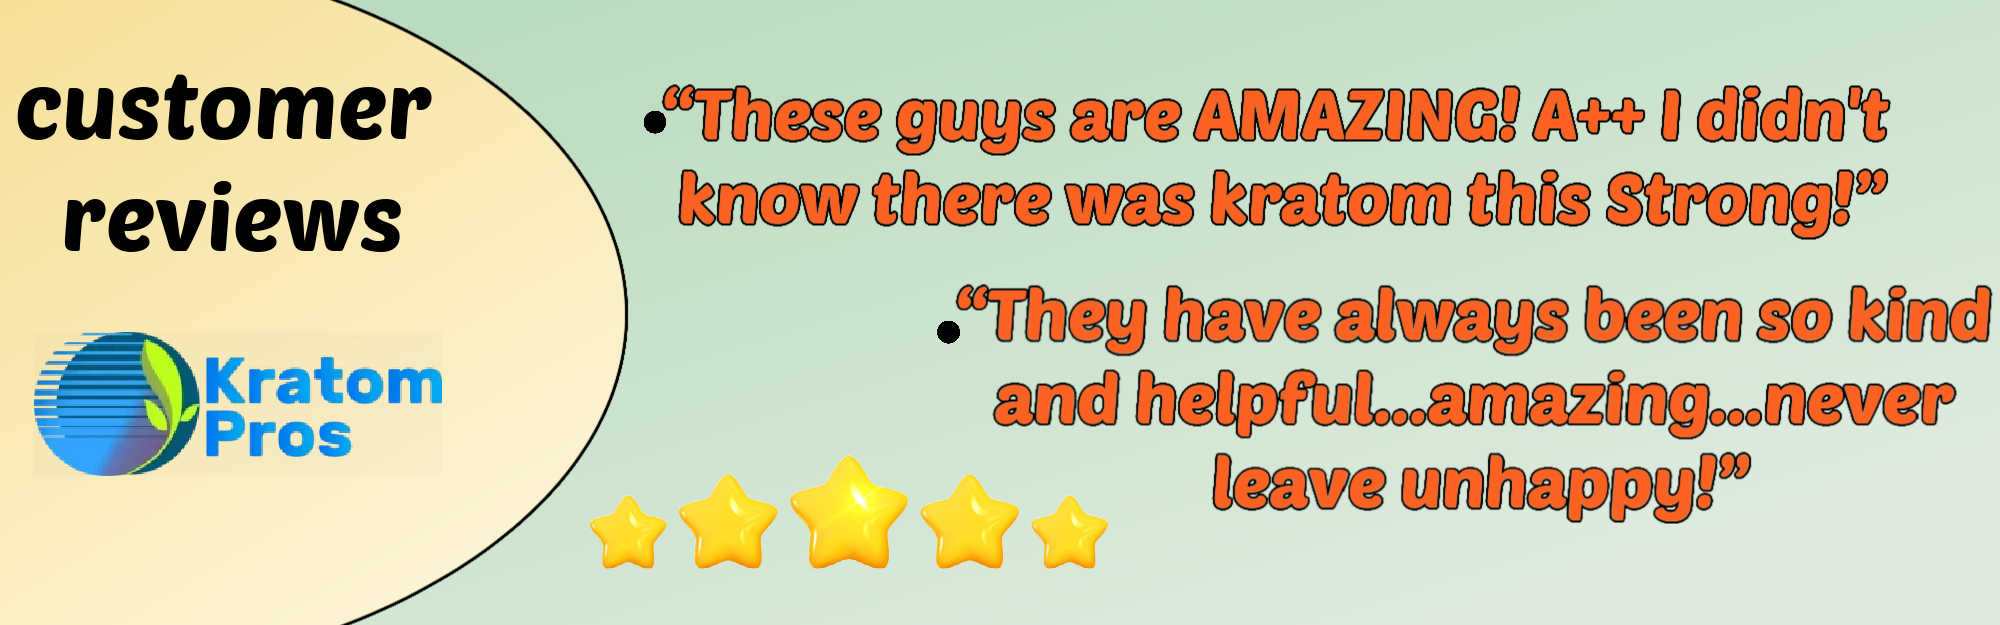 image of kratom pros customer reviews